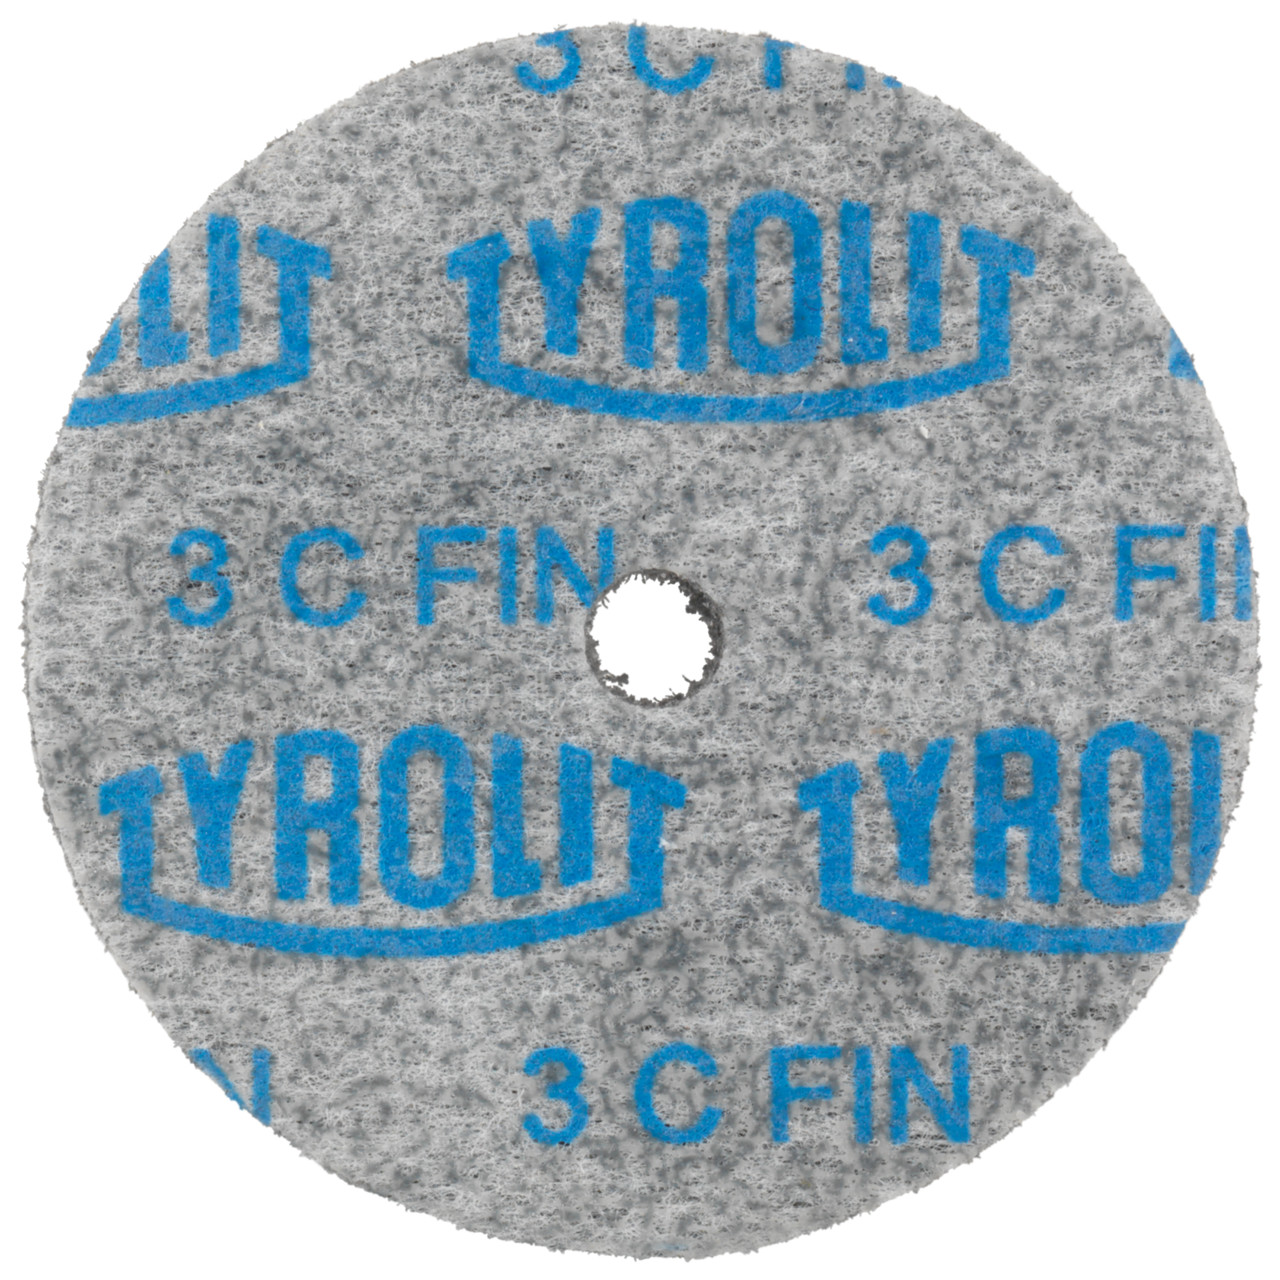 Tyrolit Discos compactos prensados DxDxH 76x6x6,3 Inserción universal, 8 A GROB, forma: 1, Art. 34189556